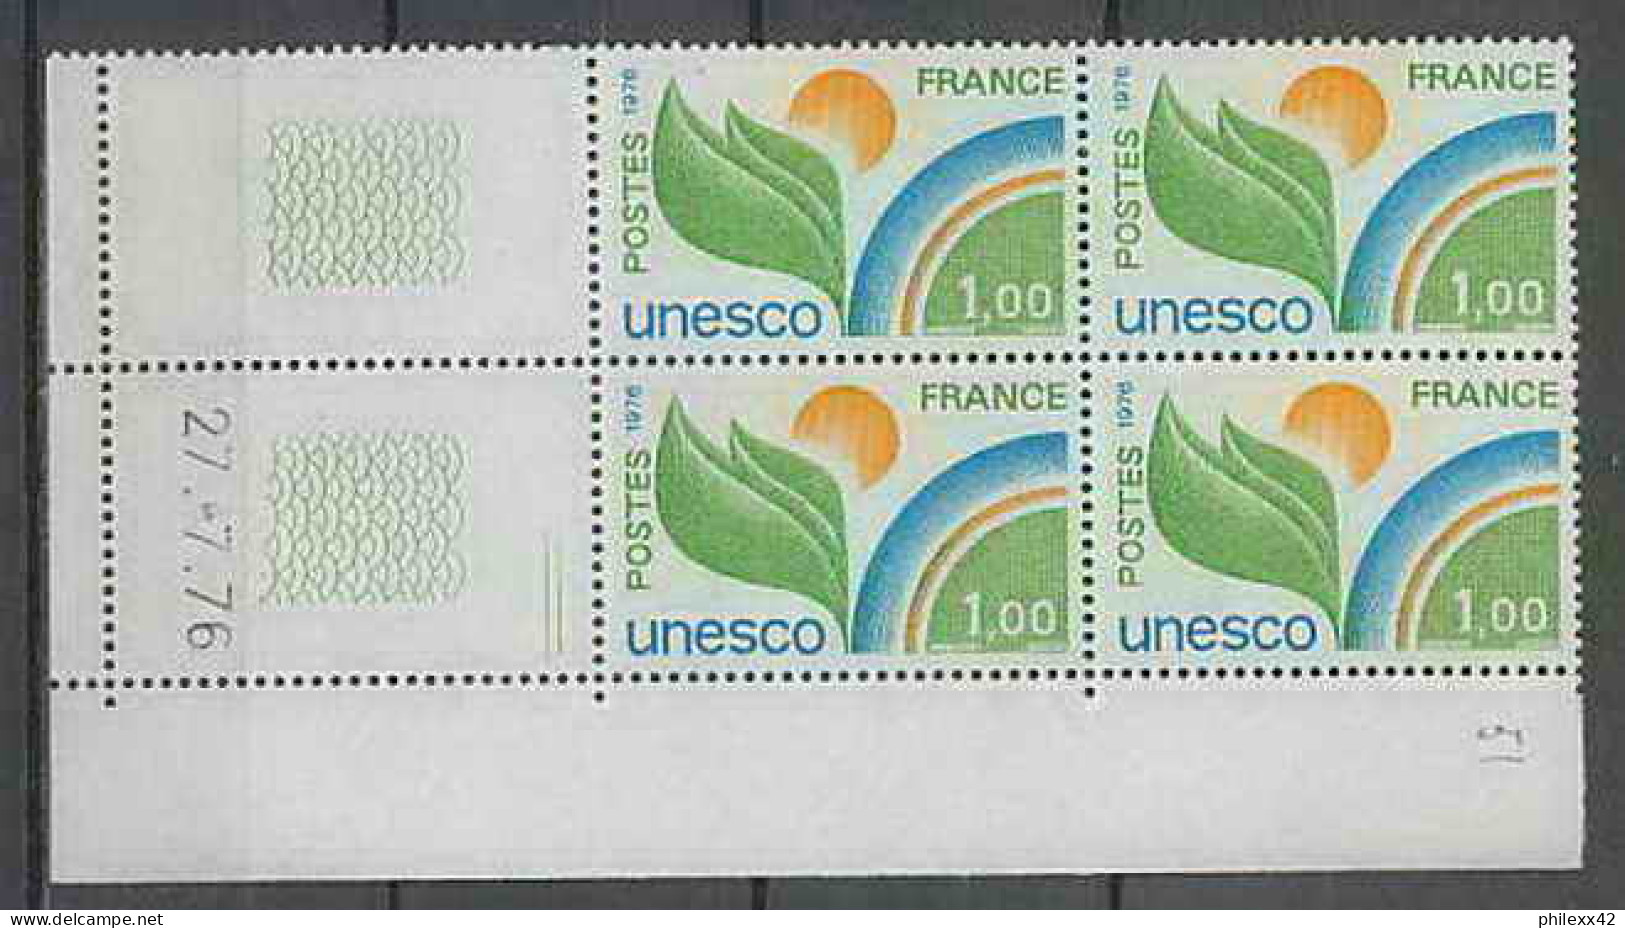 1308 - France - Coin Daté TB Neuf ** Service Unesco N°51 Date 27/7/1976 2 Traits  - Dienstmarken